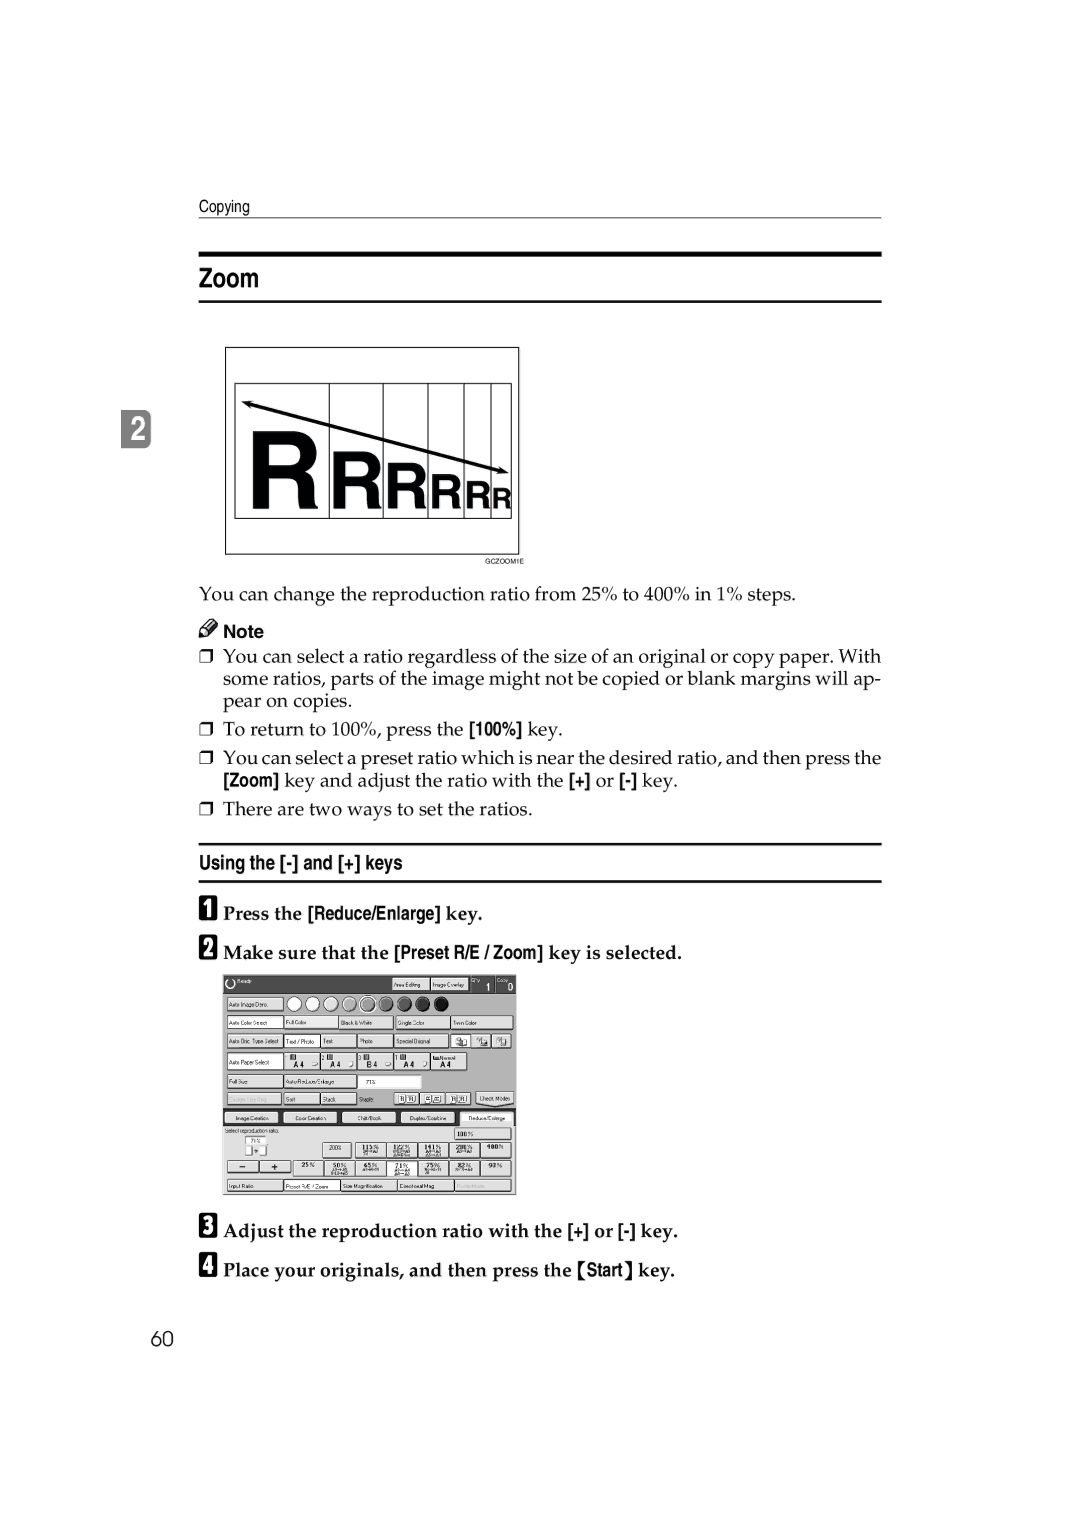 Ricoh 6513 manual Zoom, Using the and + keys 